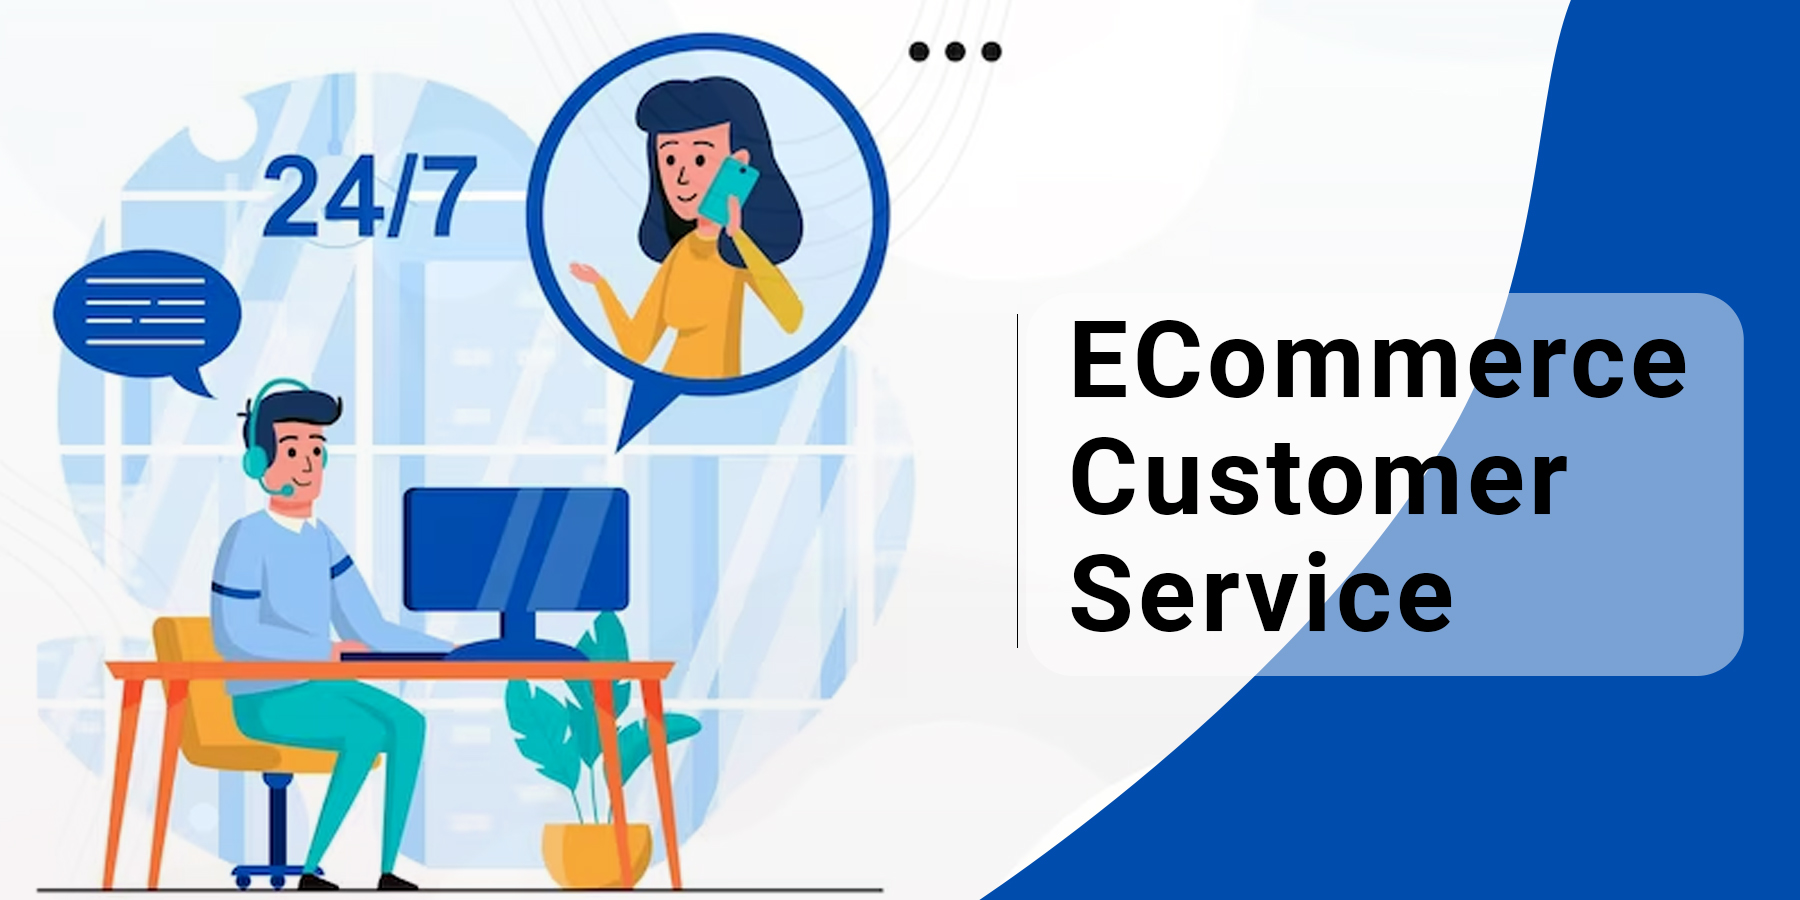 ECommerce Customer Service